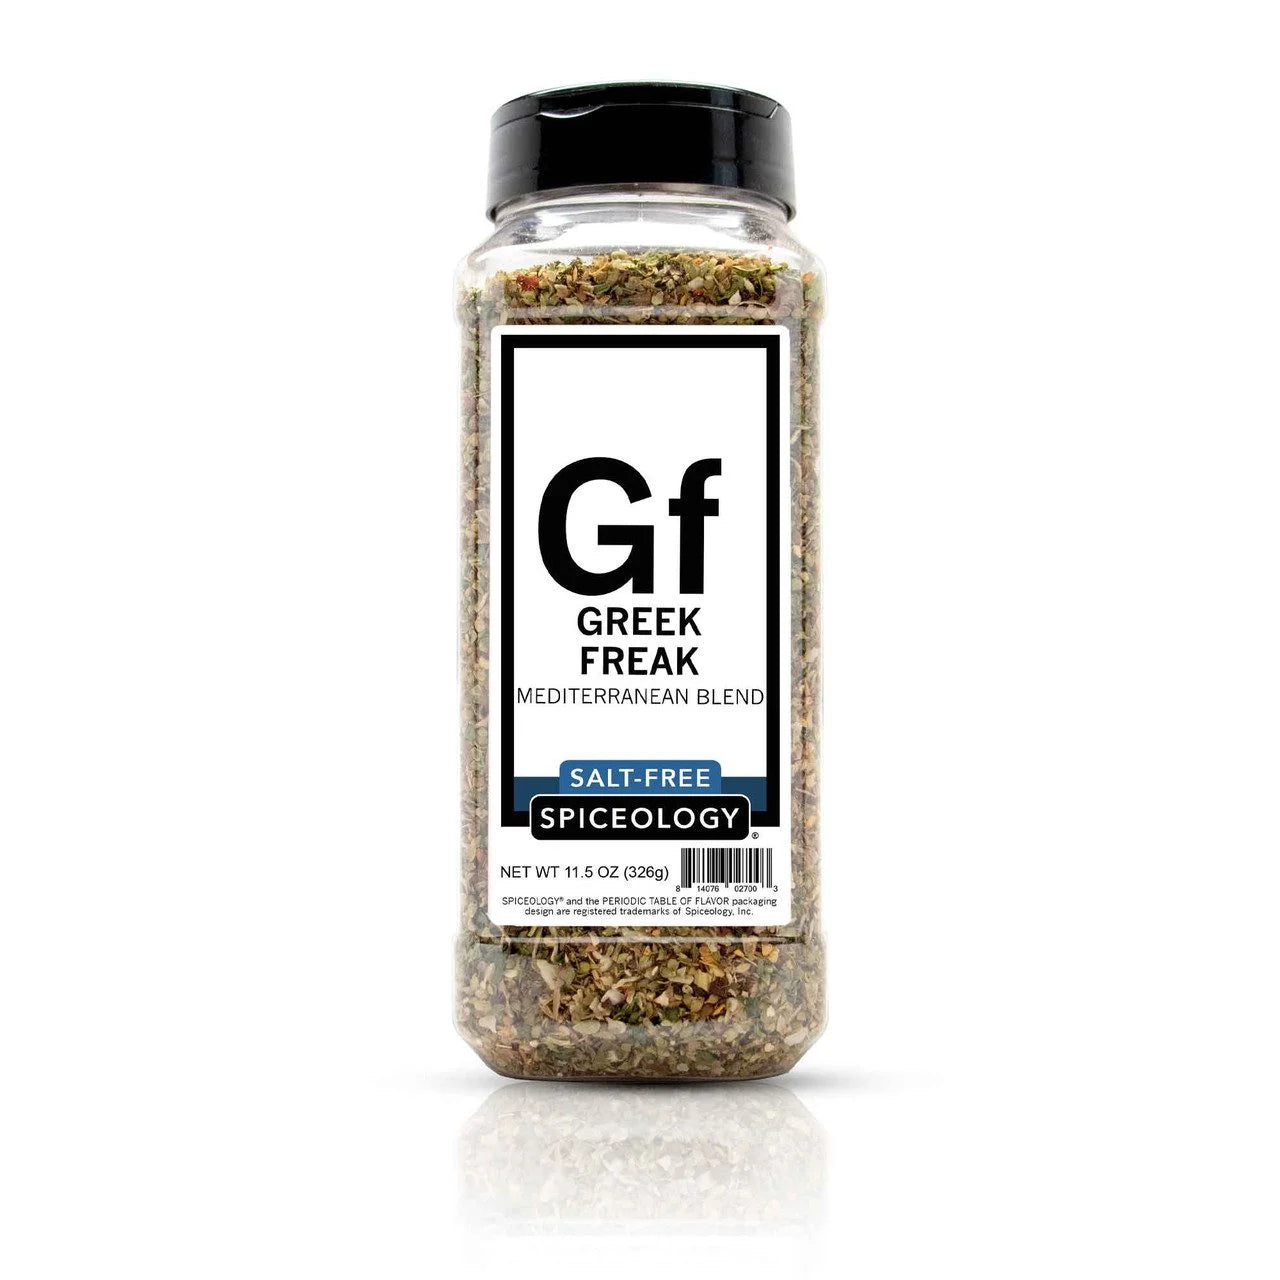 Spiceology Greek Freak Mediterranean Salt-Free Seasoning